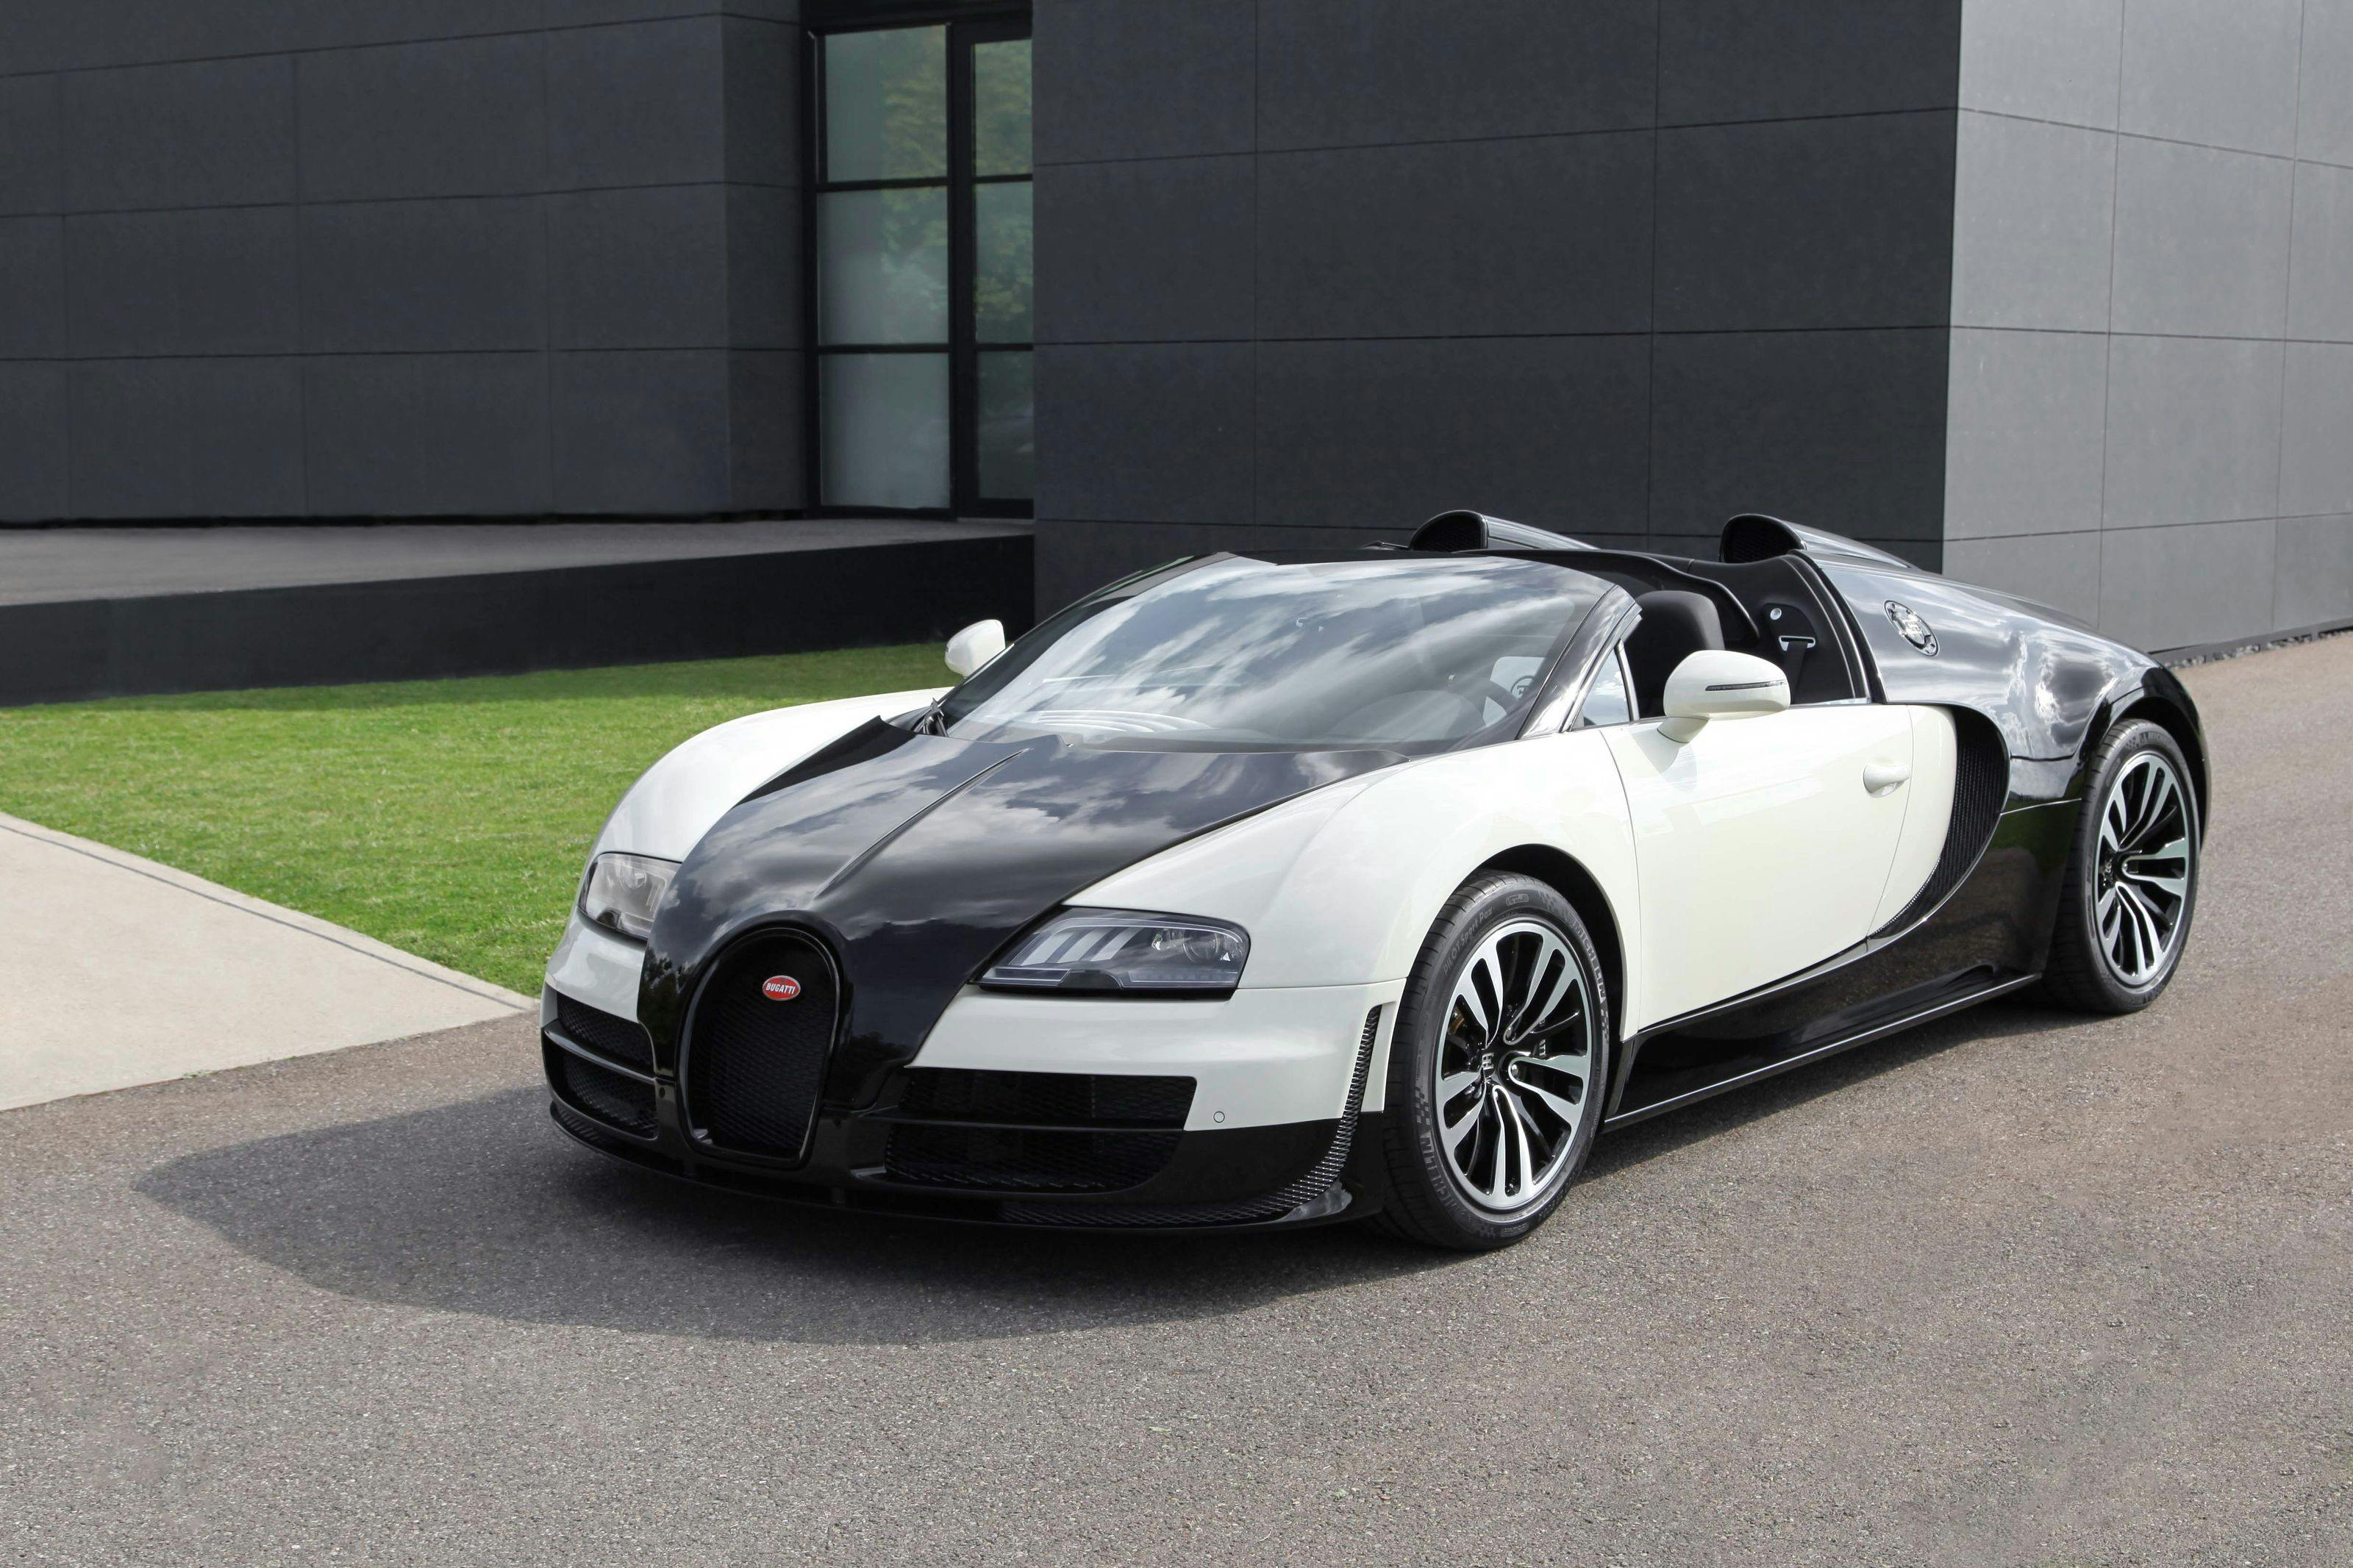 Qatar International Motor Show 2014: International show première for the Bugatti Veyron 16.4 Grand Sport Vitesse "Lang Lang"